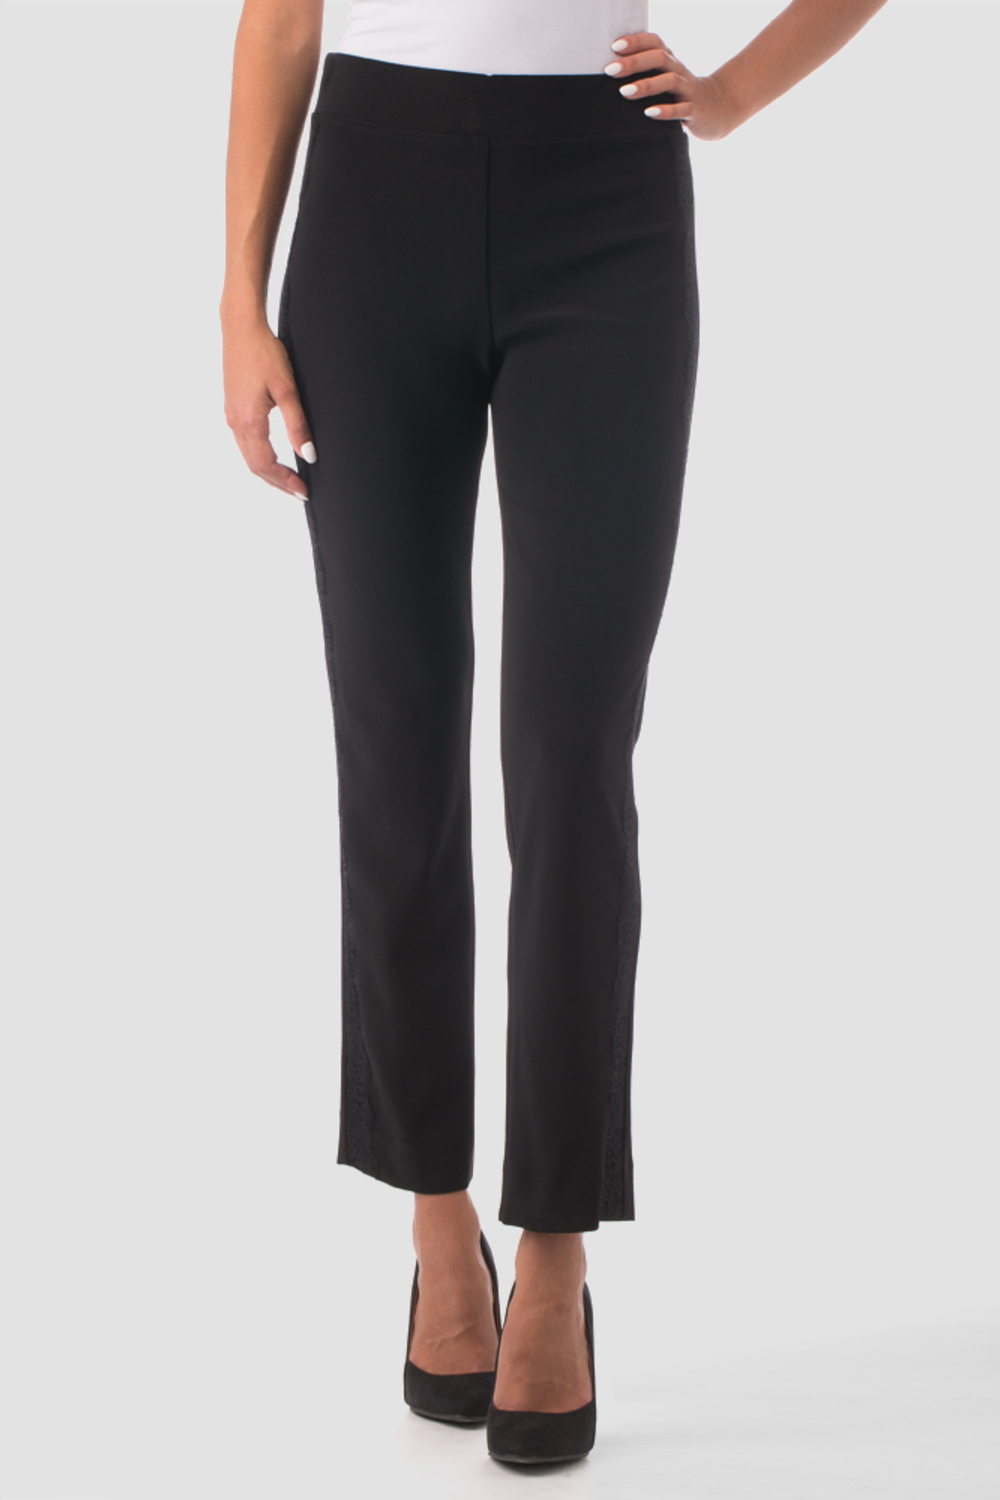 Joseph Ribkoff pantalon style 164556. Noir/noir